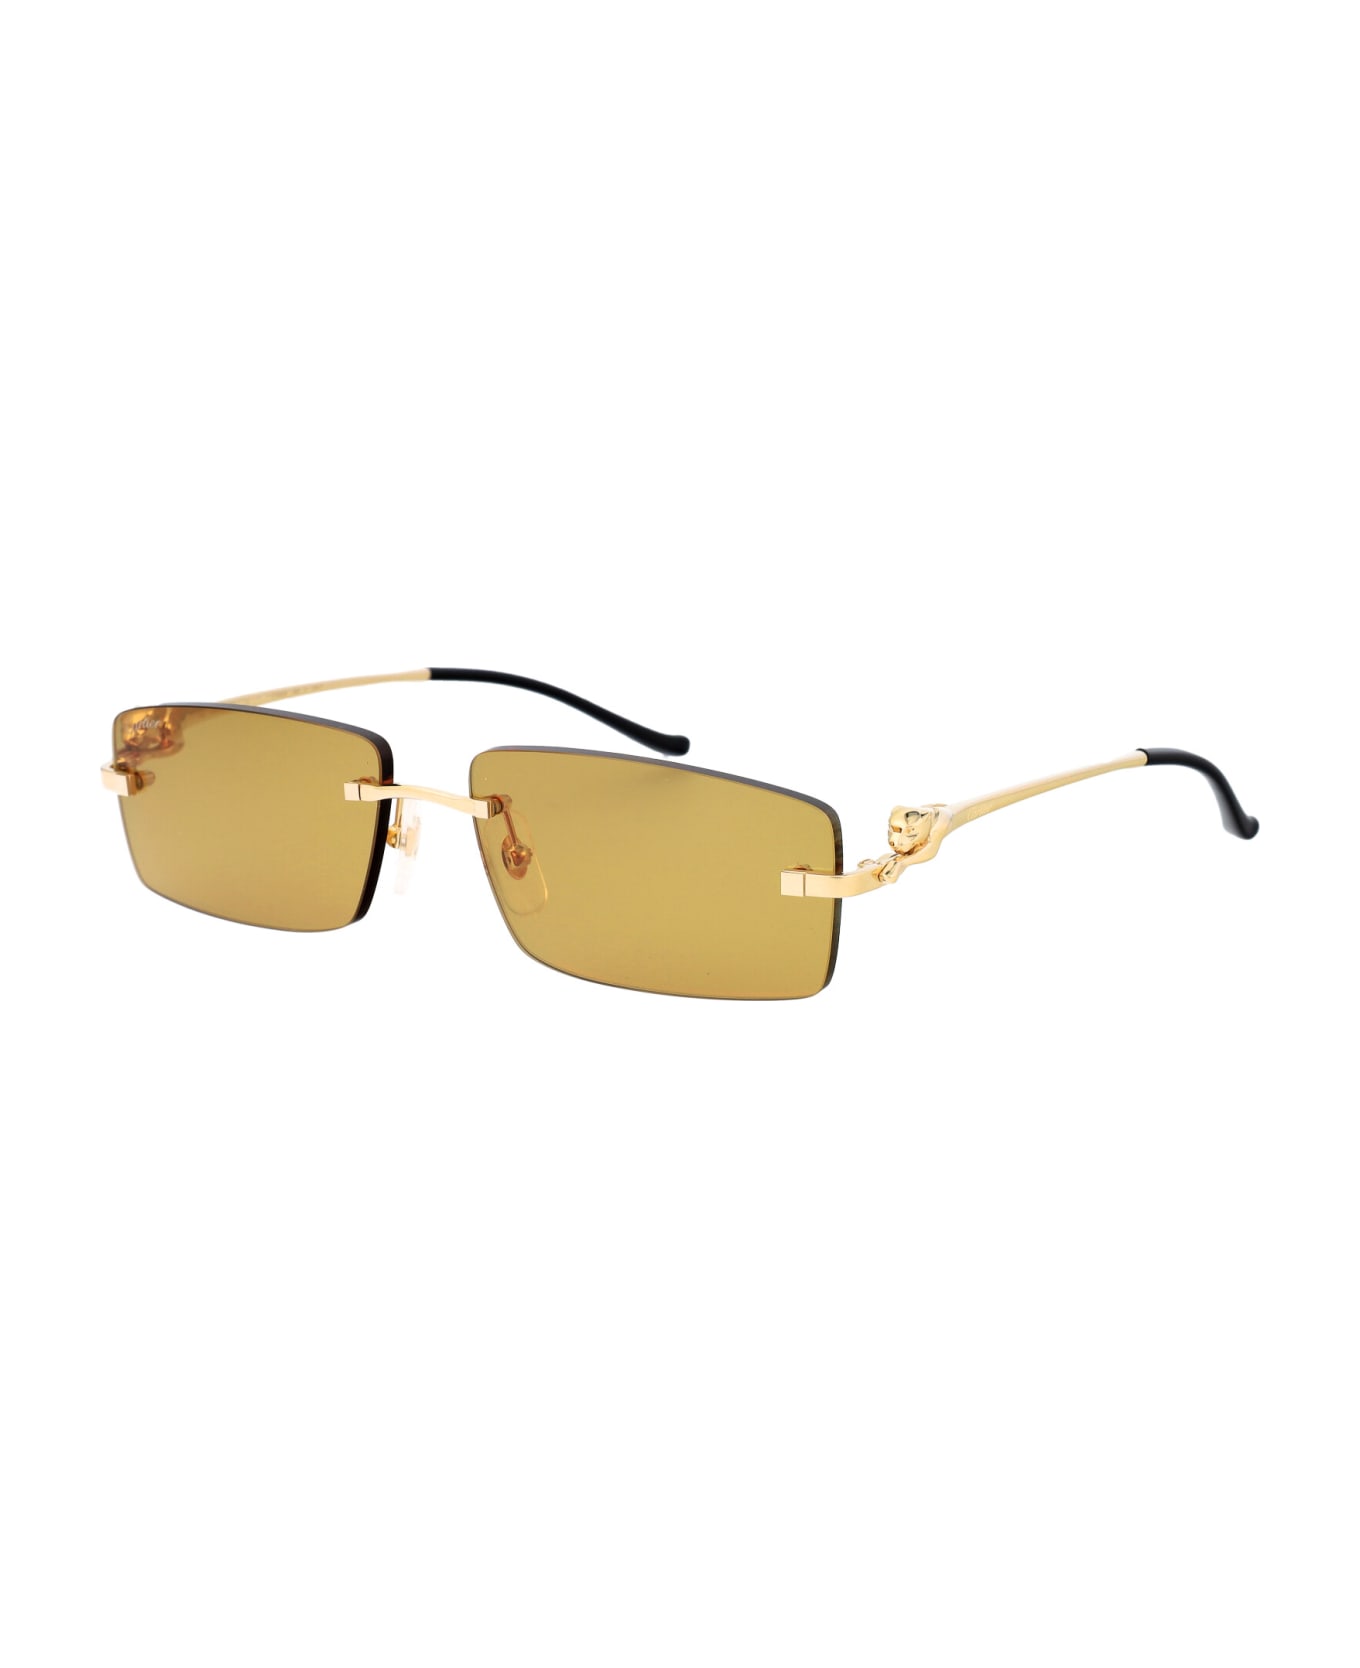 Cartier Eyewear Ct0430s Sunglasses - 003 GOLD GOLD YELLOW サングラス